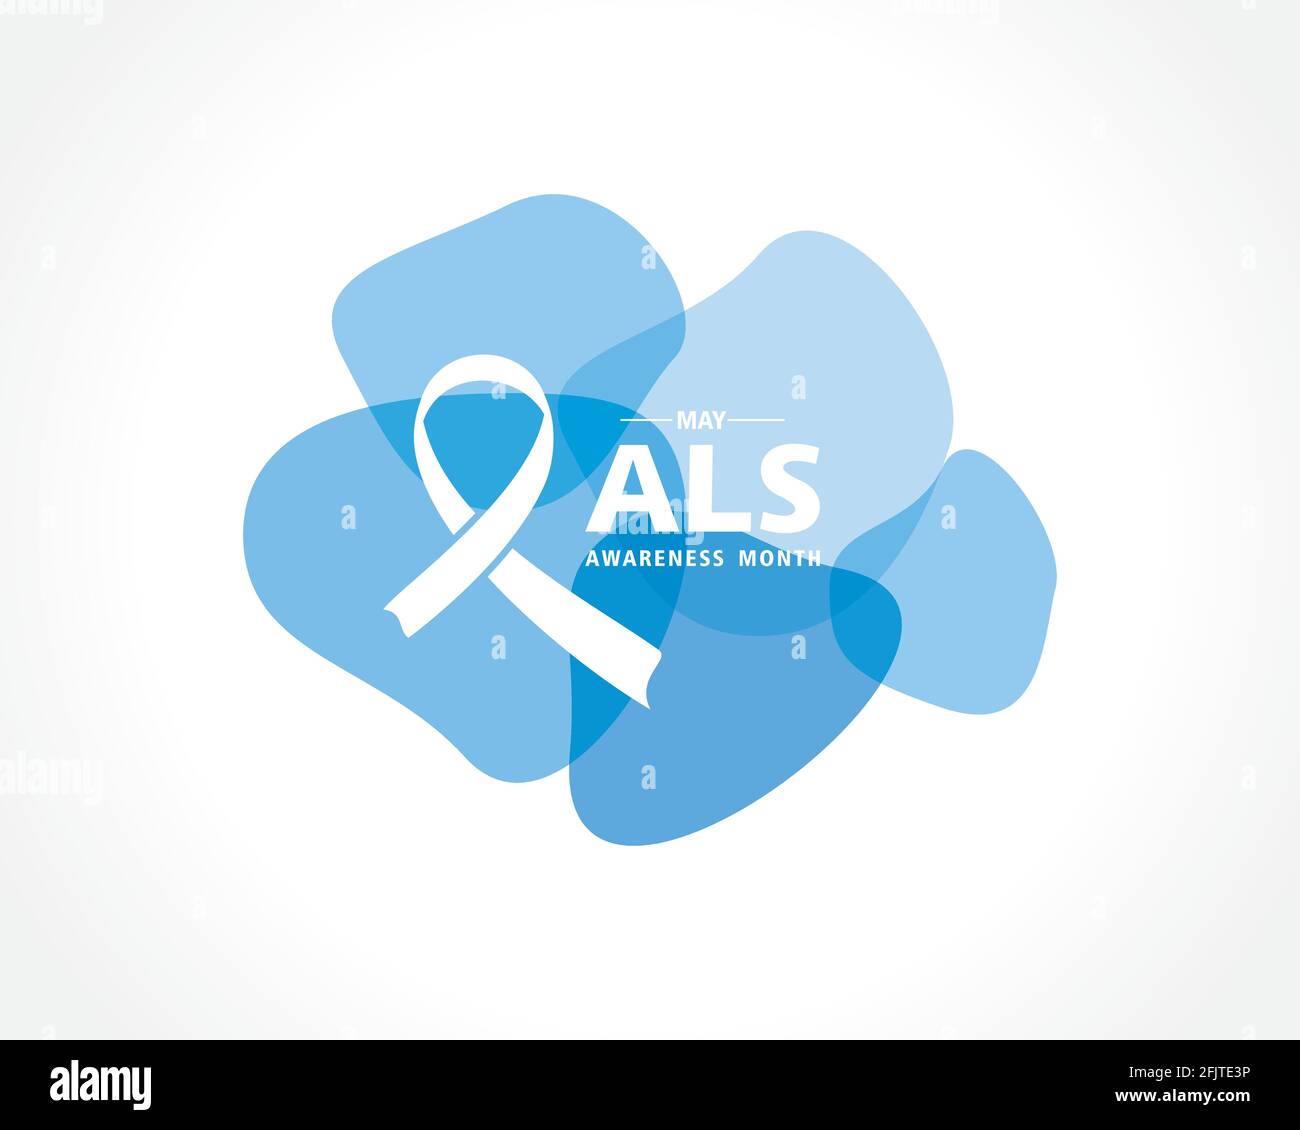 ALS Awareness